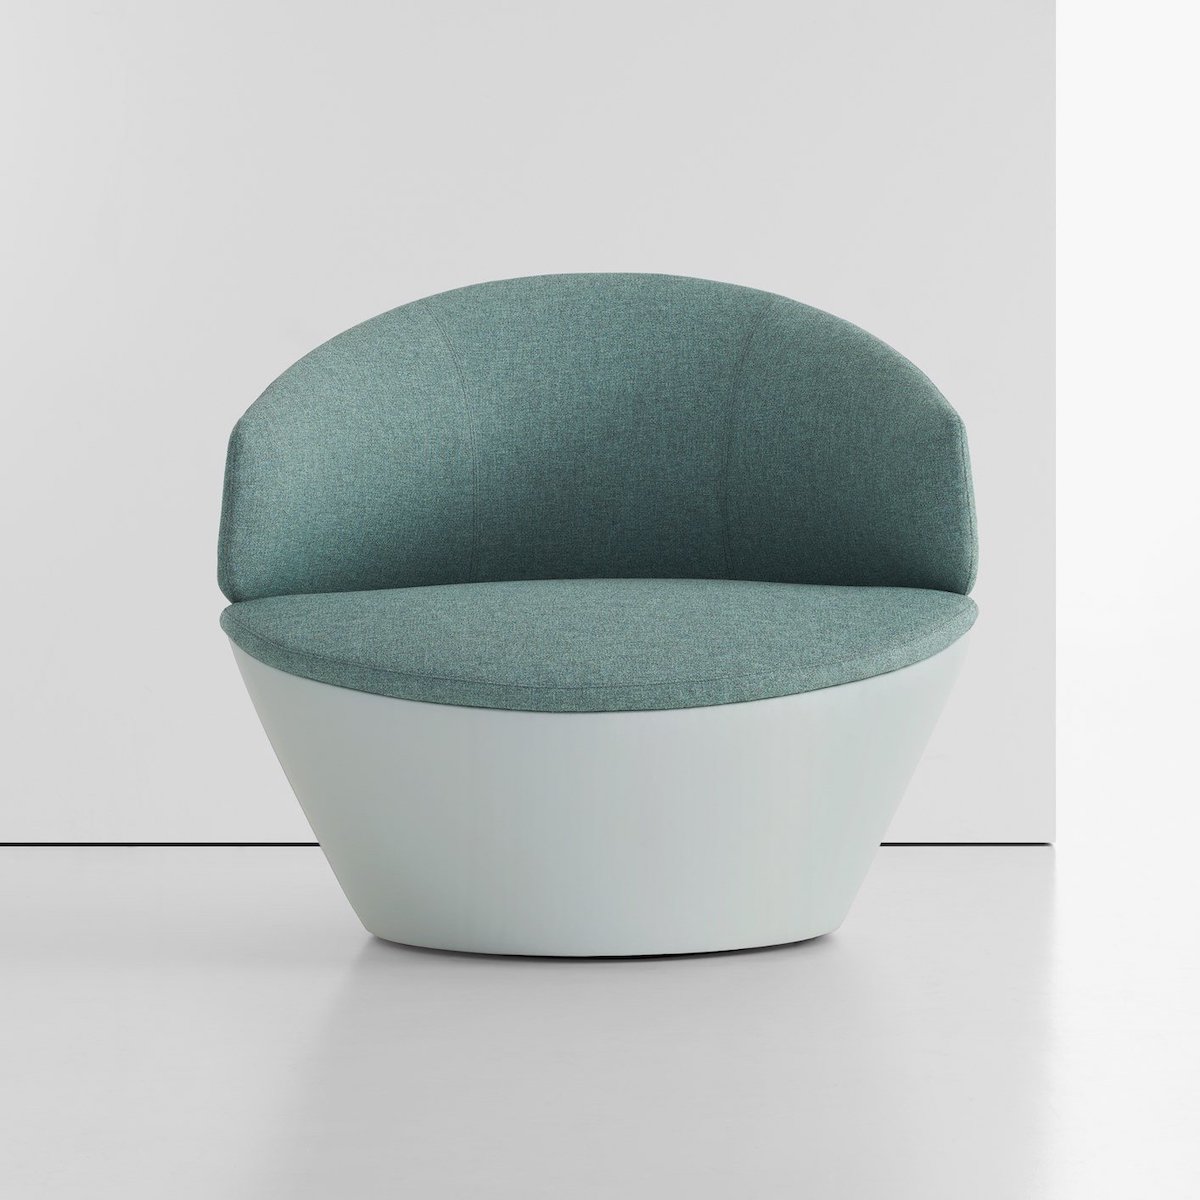 Khi con quay thân thuộc hóa chiếc ghế xoay | Bernhardt Design - Luca Nichetto